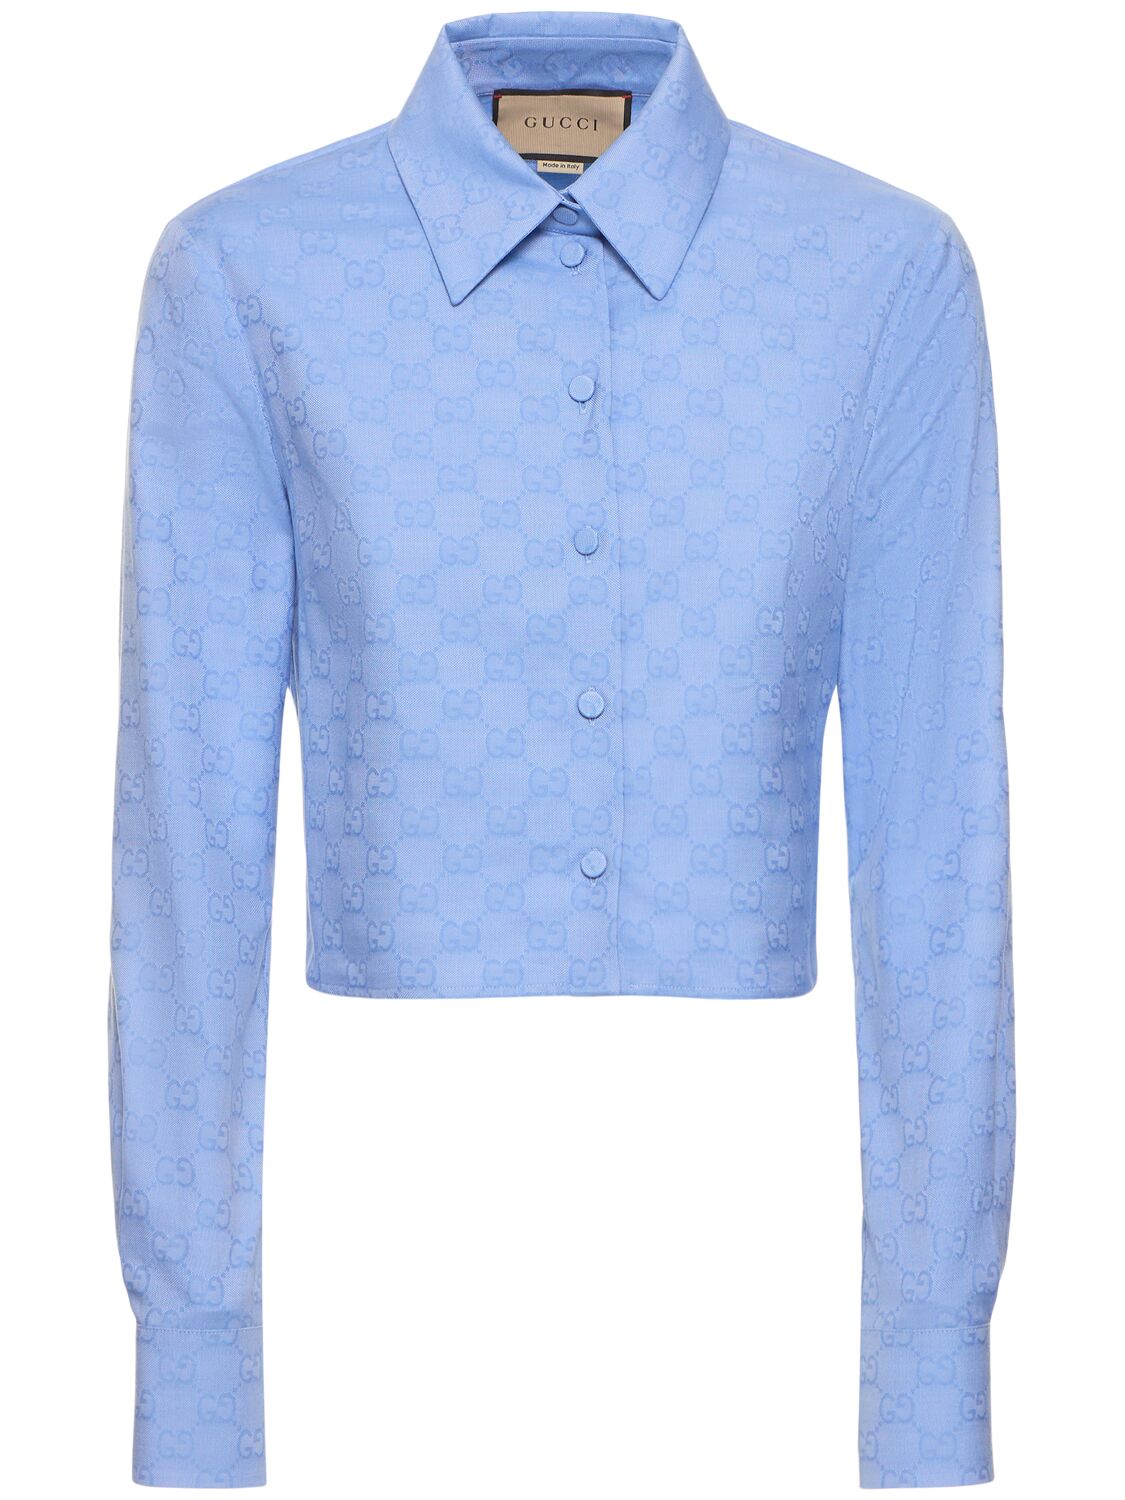 Gg Supreme Oxford Cotton Shirt - GUCCI - Modalova